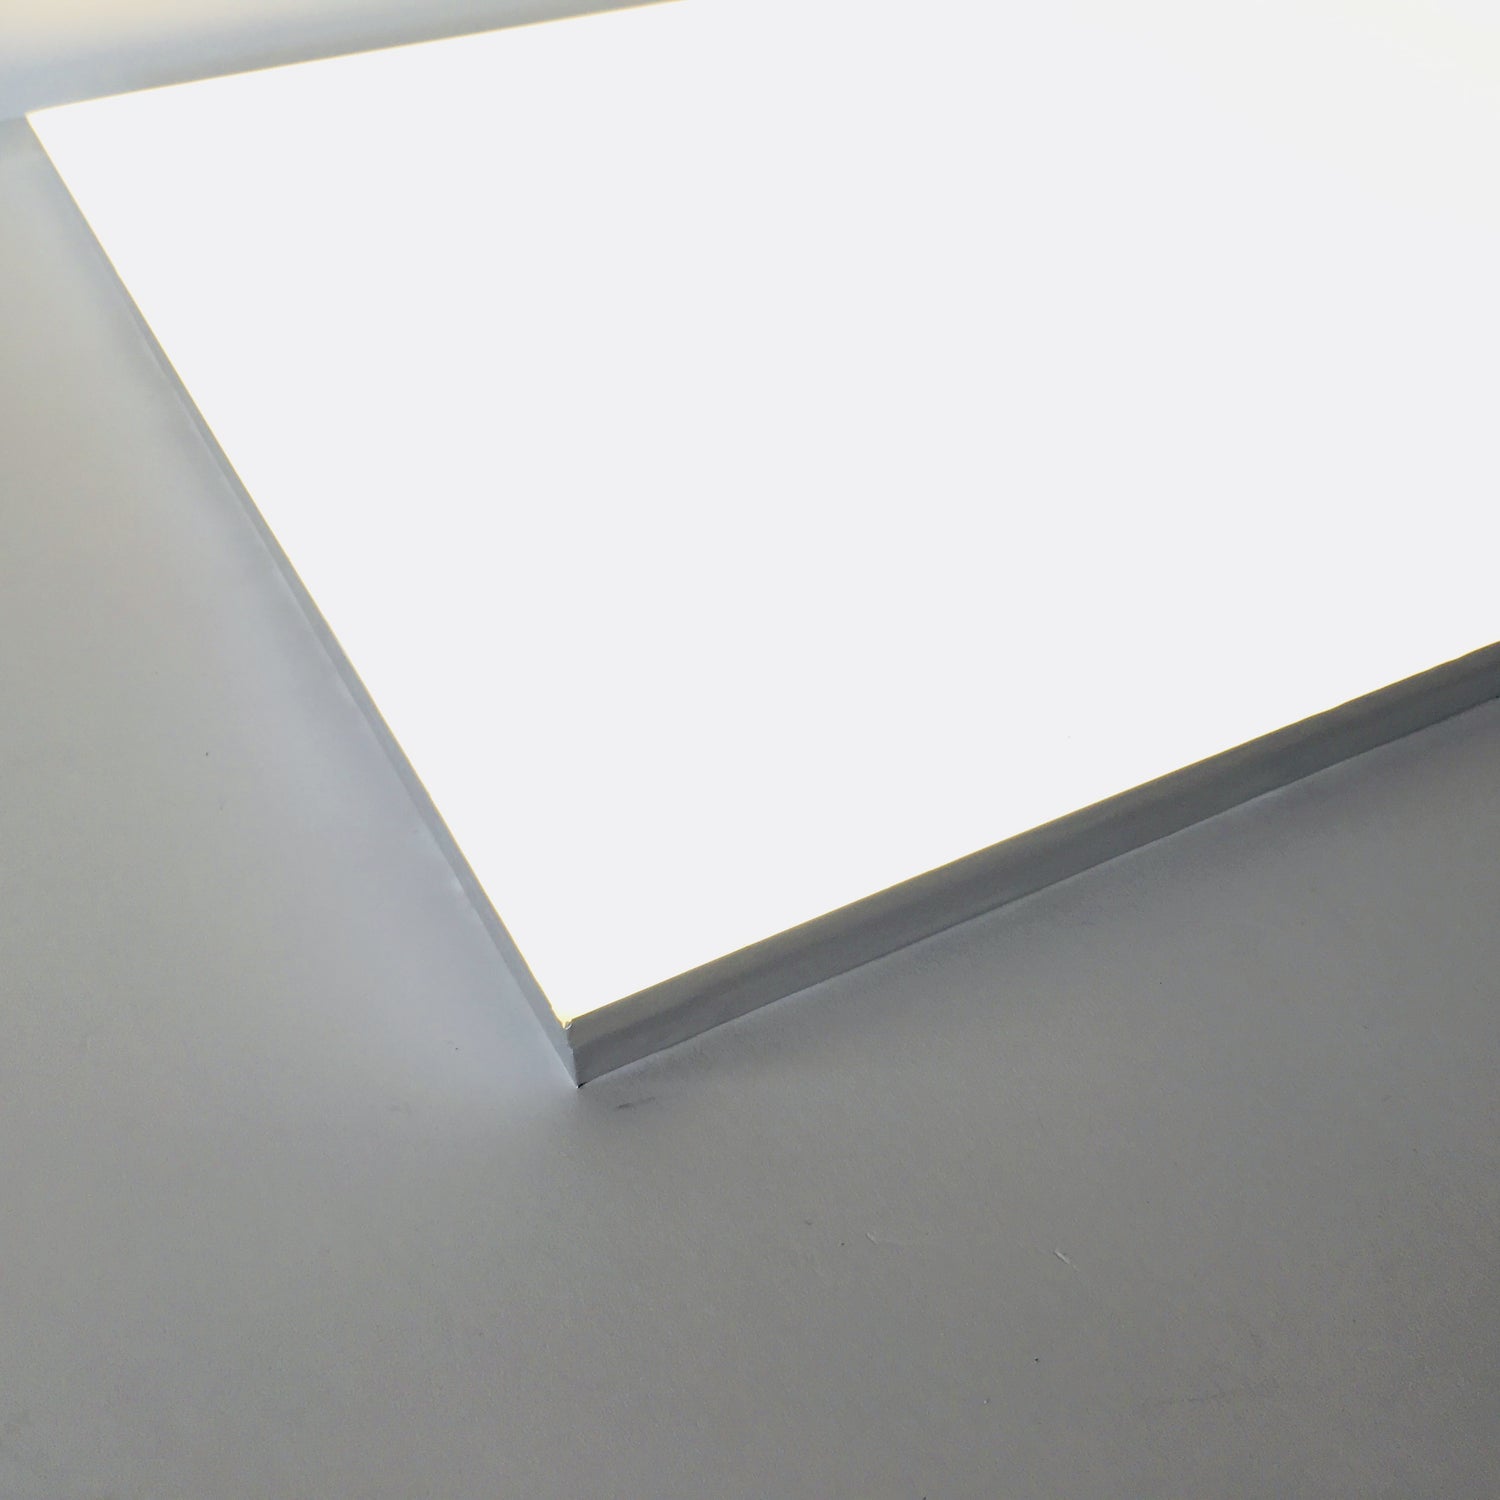 Frameless Adjustable LED Panel light - Releatoplight